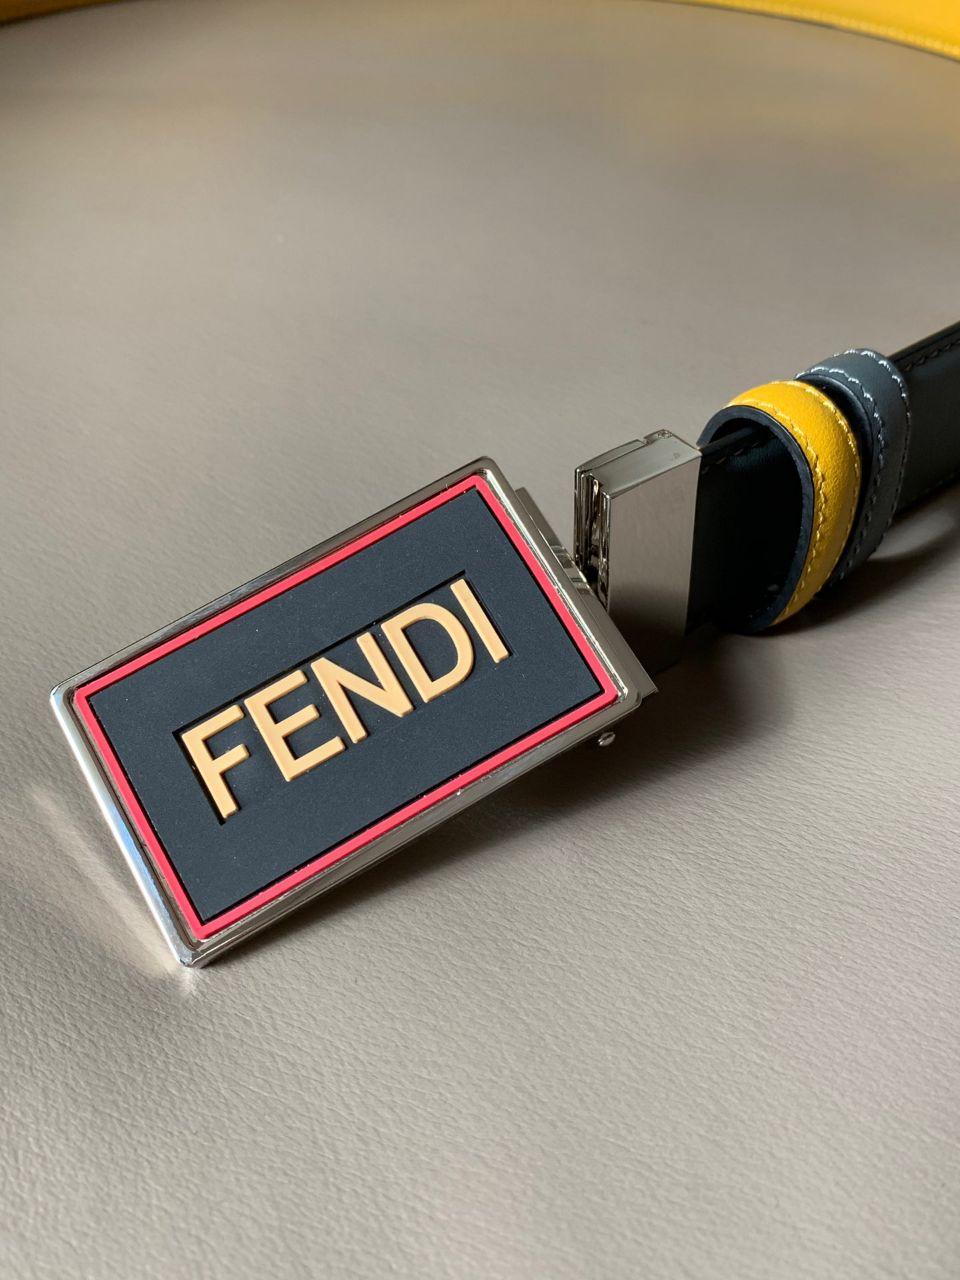 FENDI 펜디 양면 벨트 (폭:34mm)